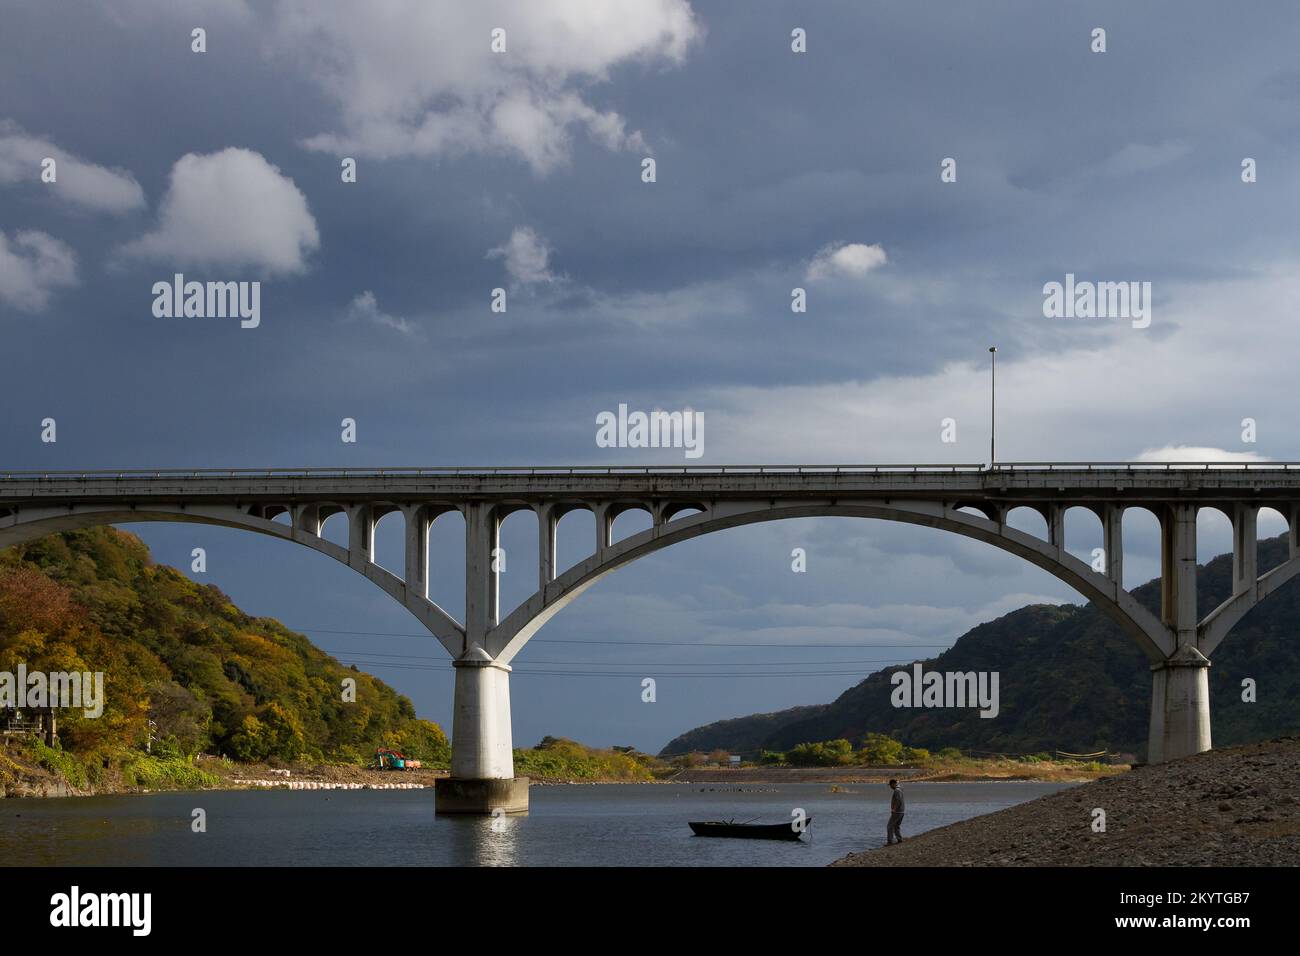 The old Ogura Bridge over the Sagami river in Kanagawa, Japan. Stock Photo